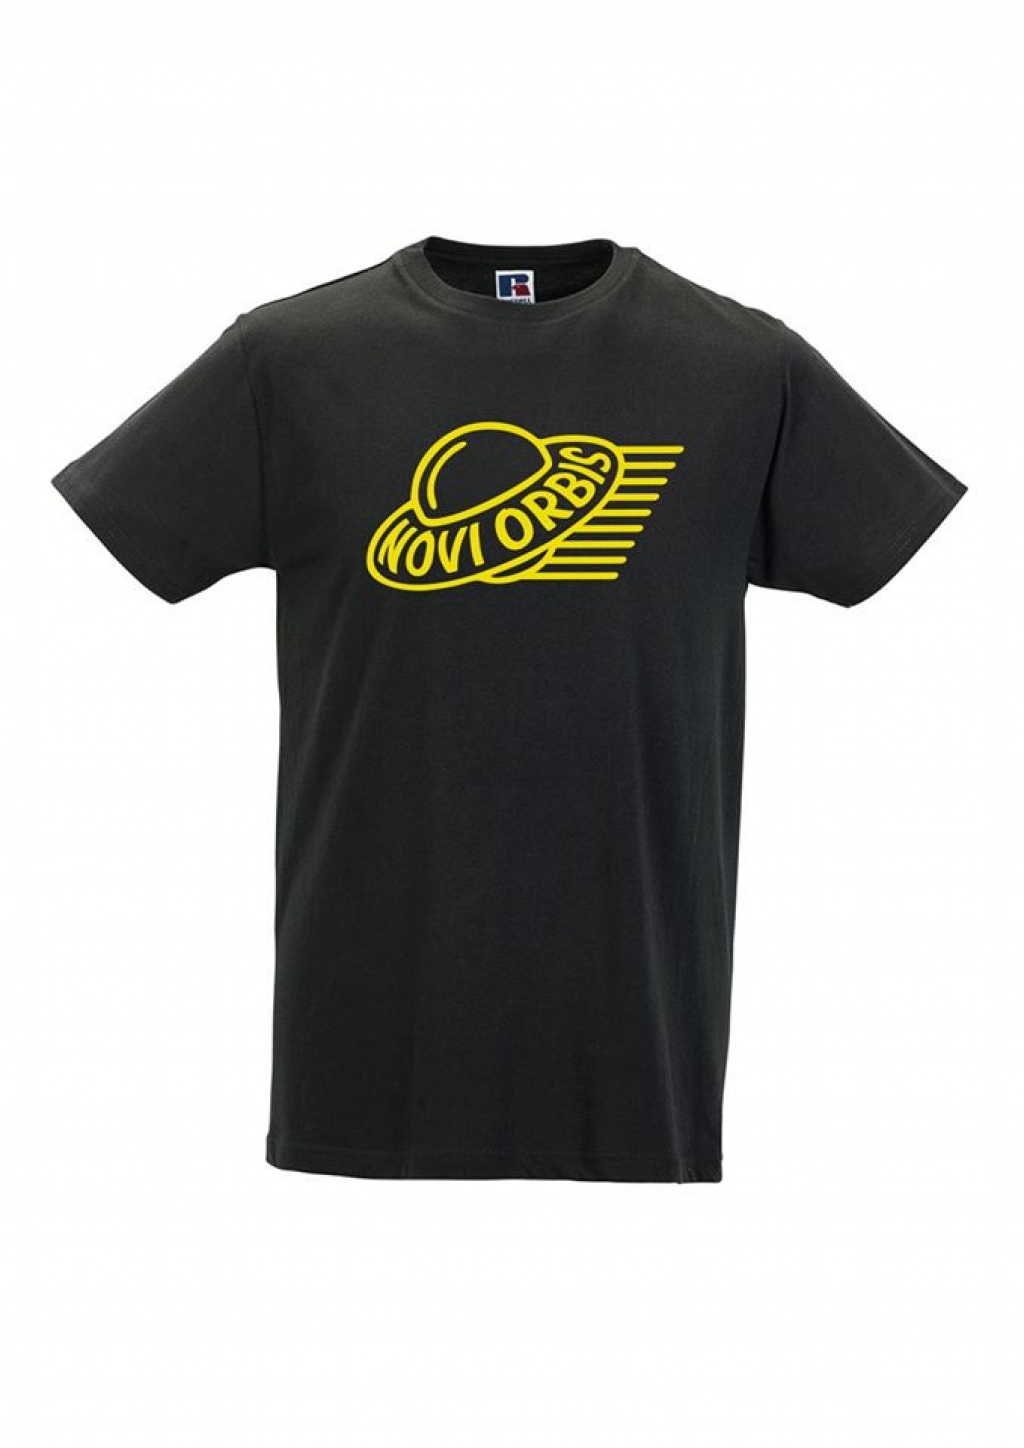 T-Shirt Novi Orbis - Size S / RJ155M black with yellow stamp